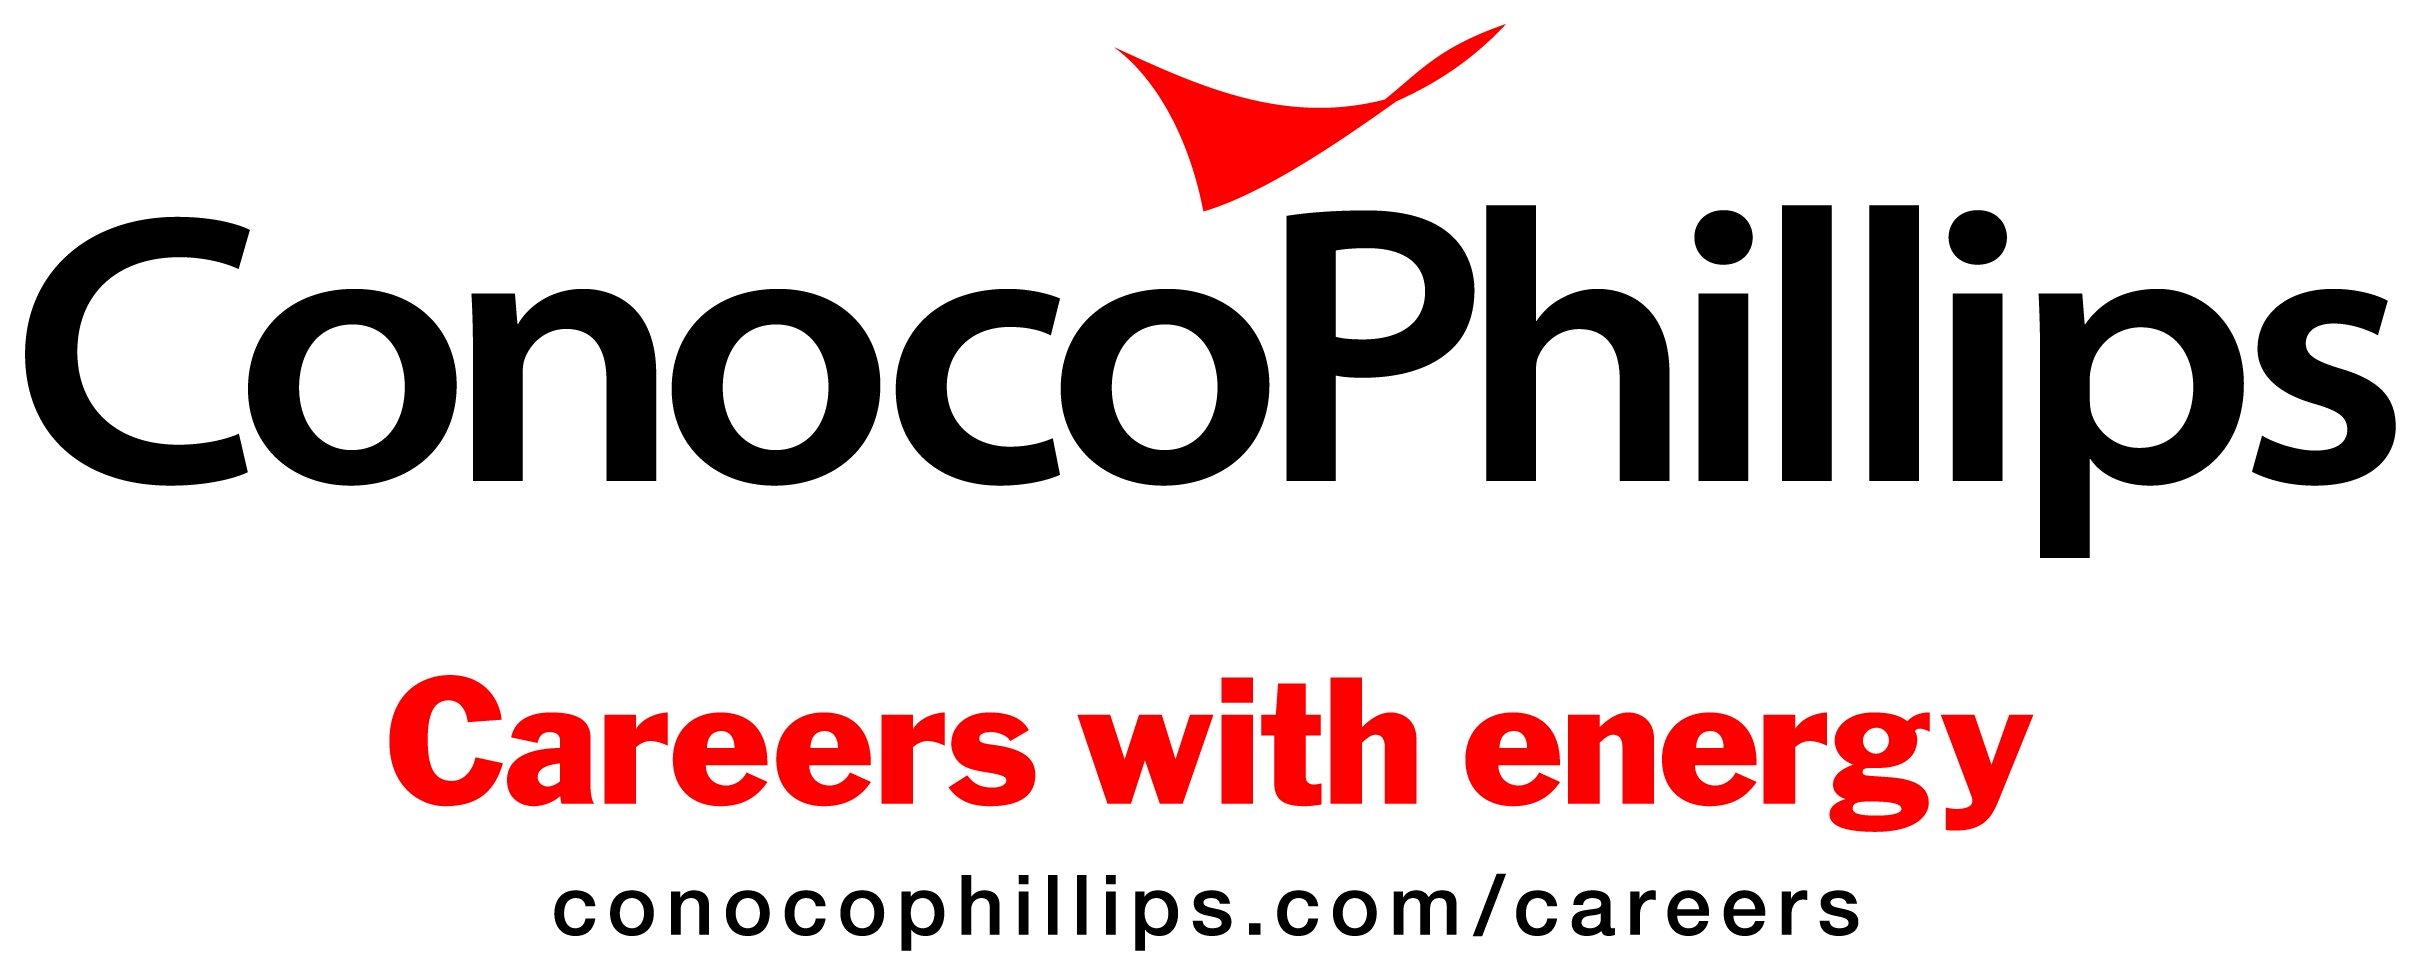 free vector Conocophillips 0